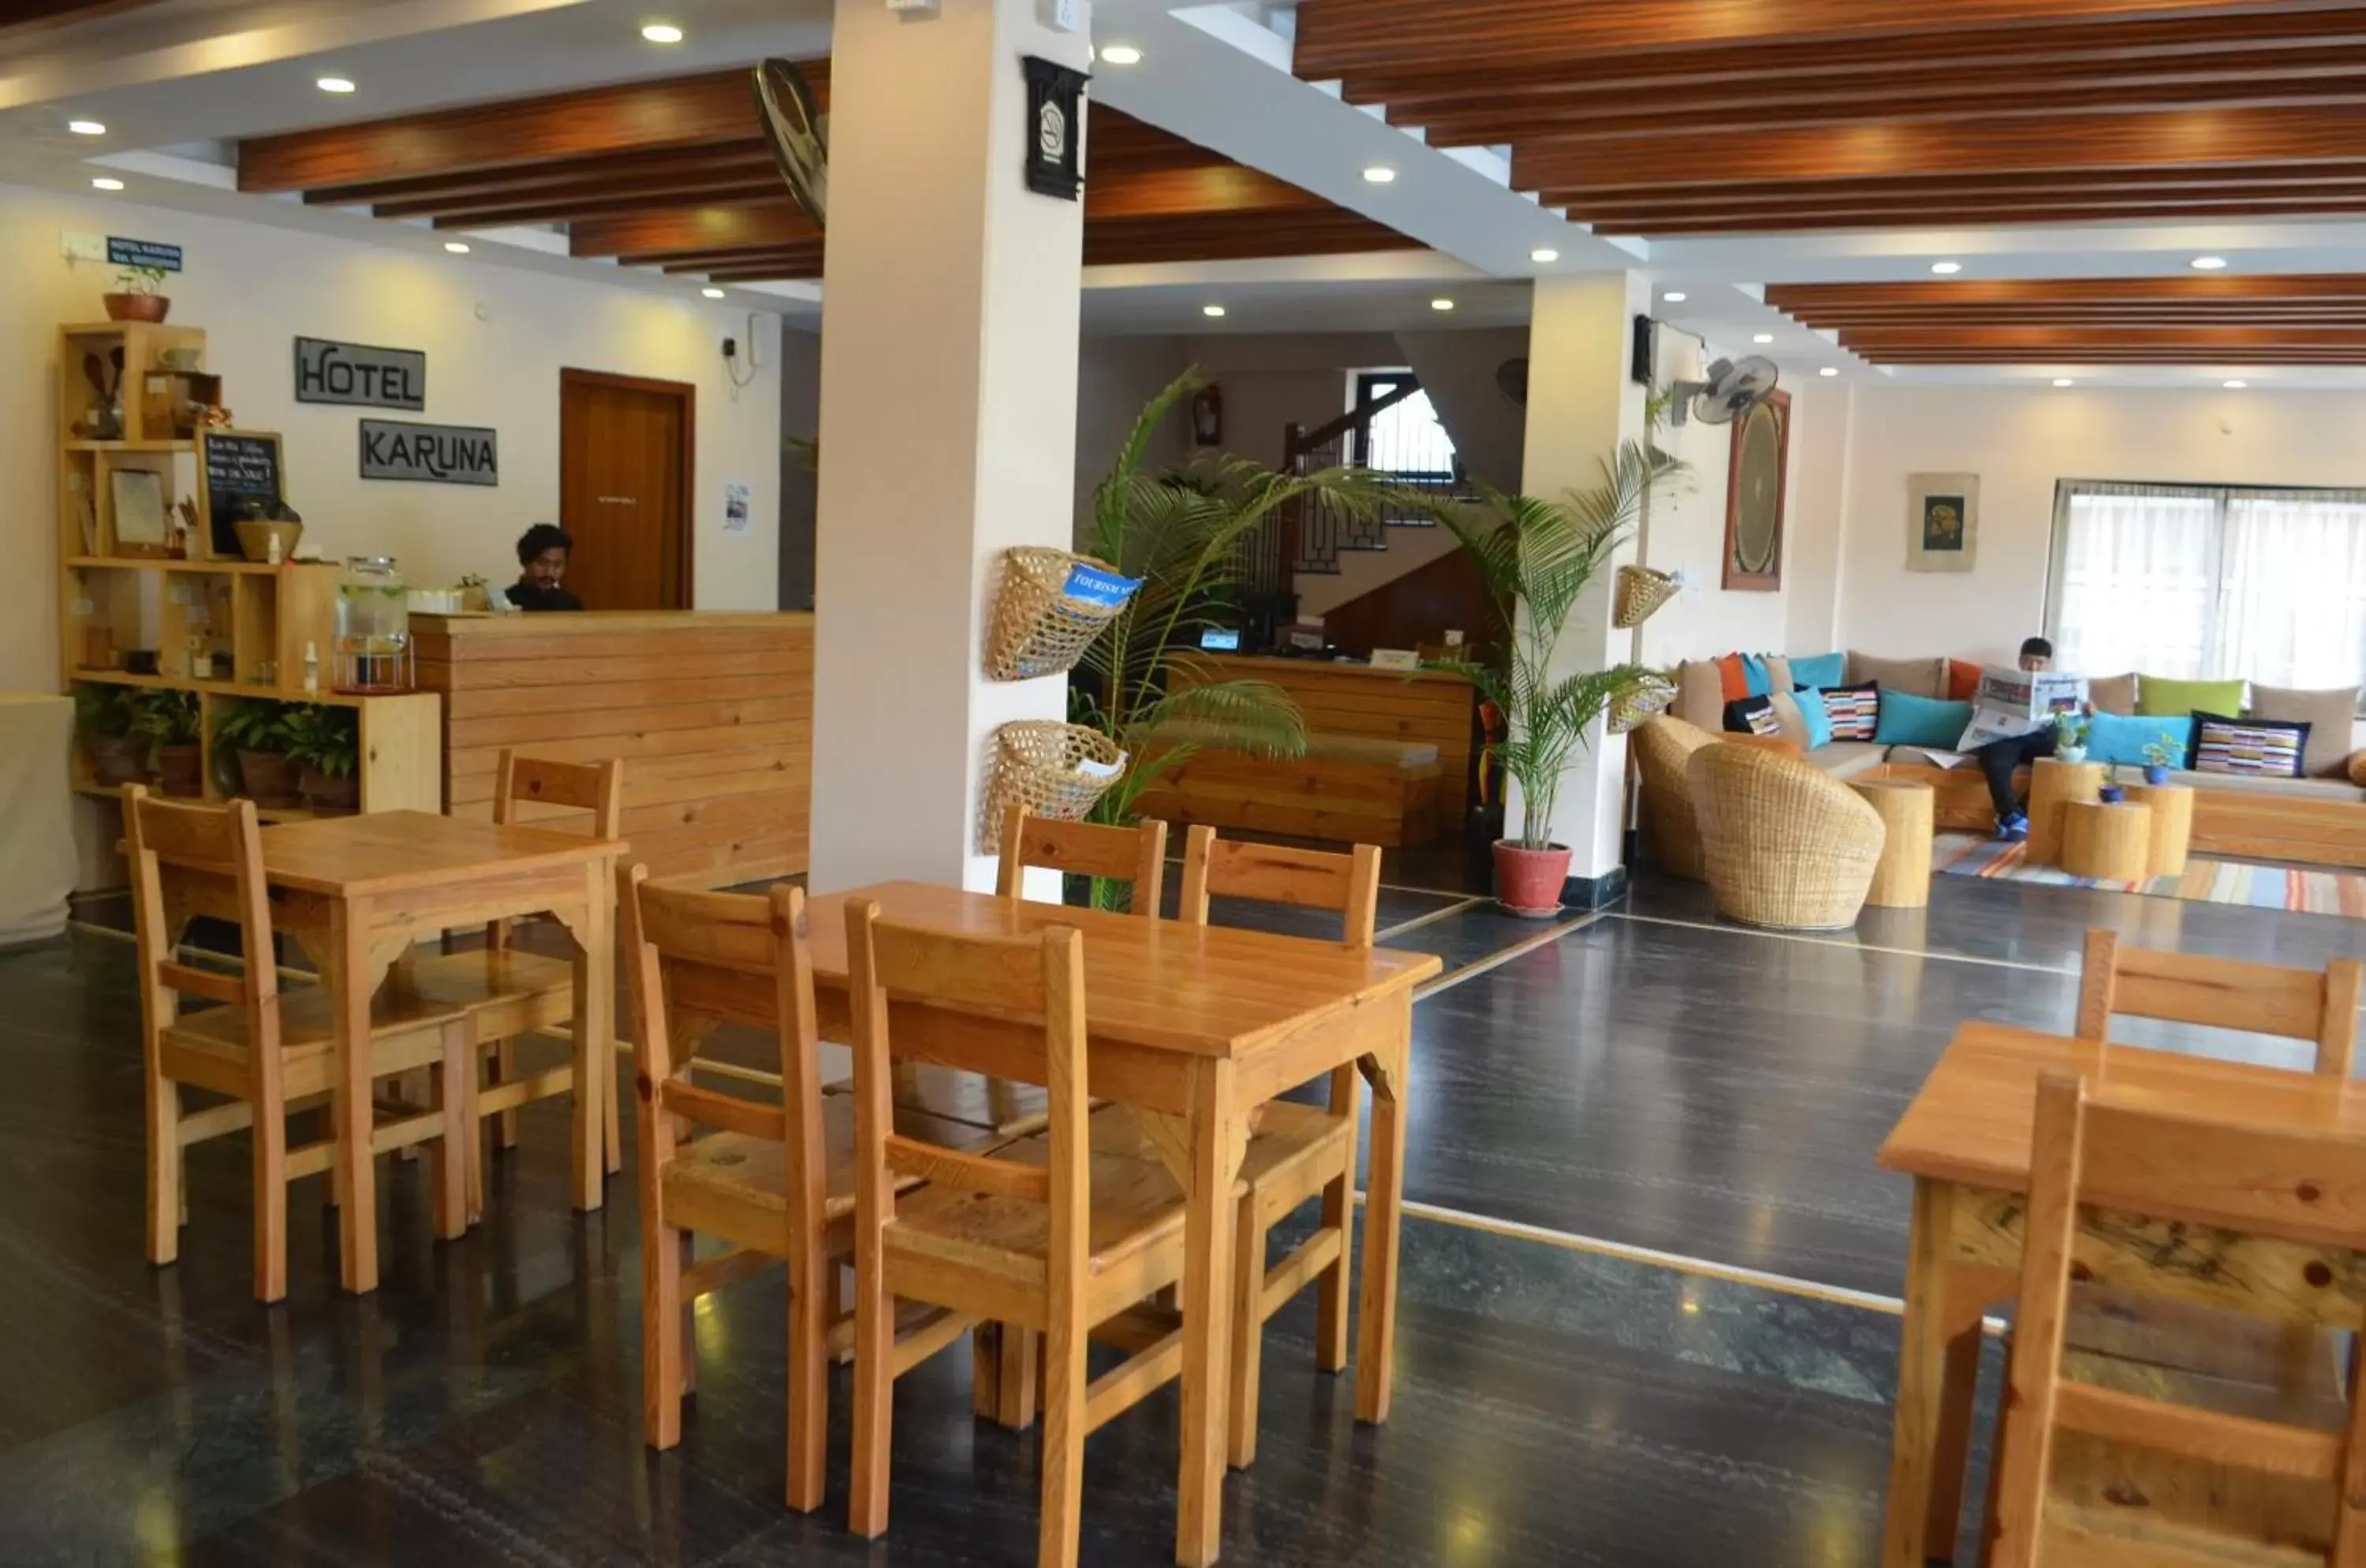 Staff, Restaurant/Places to Eat in Hotel Karuna